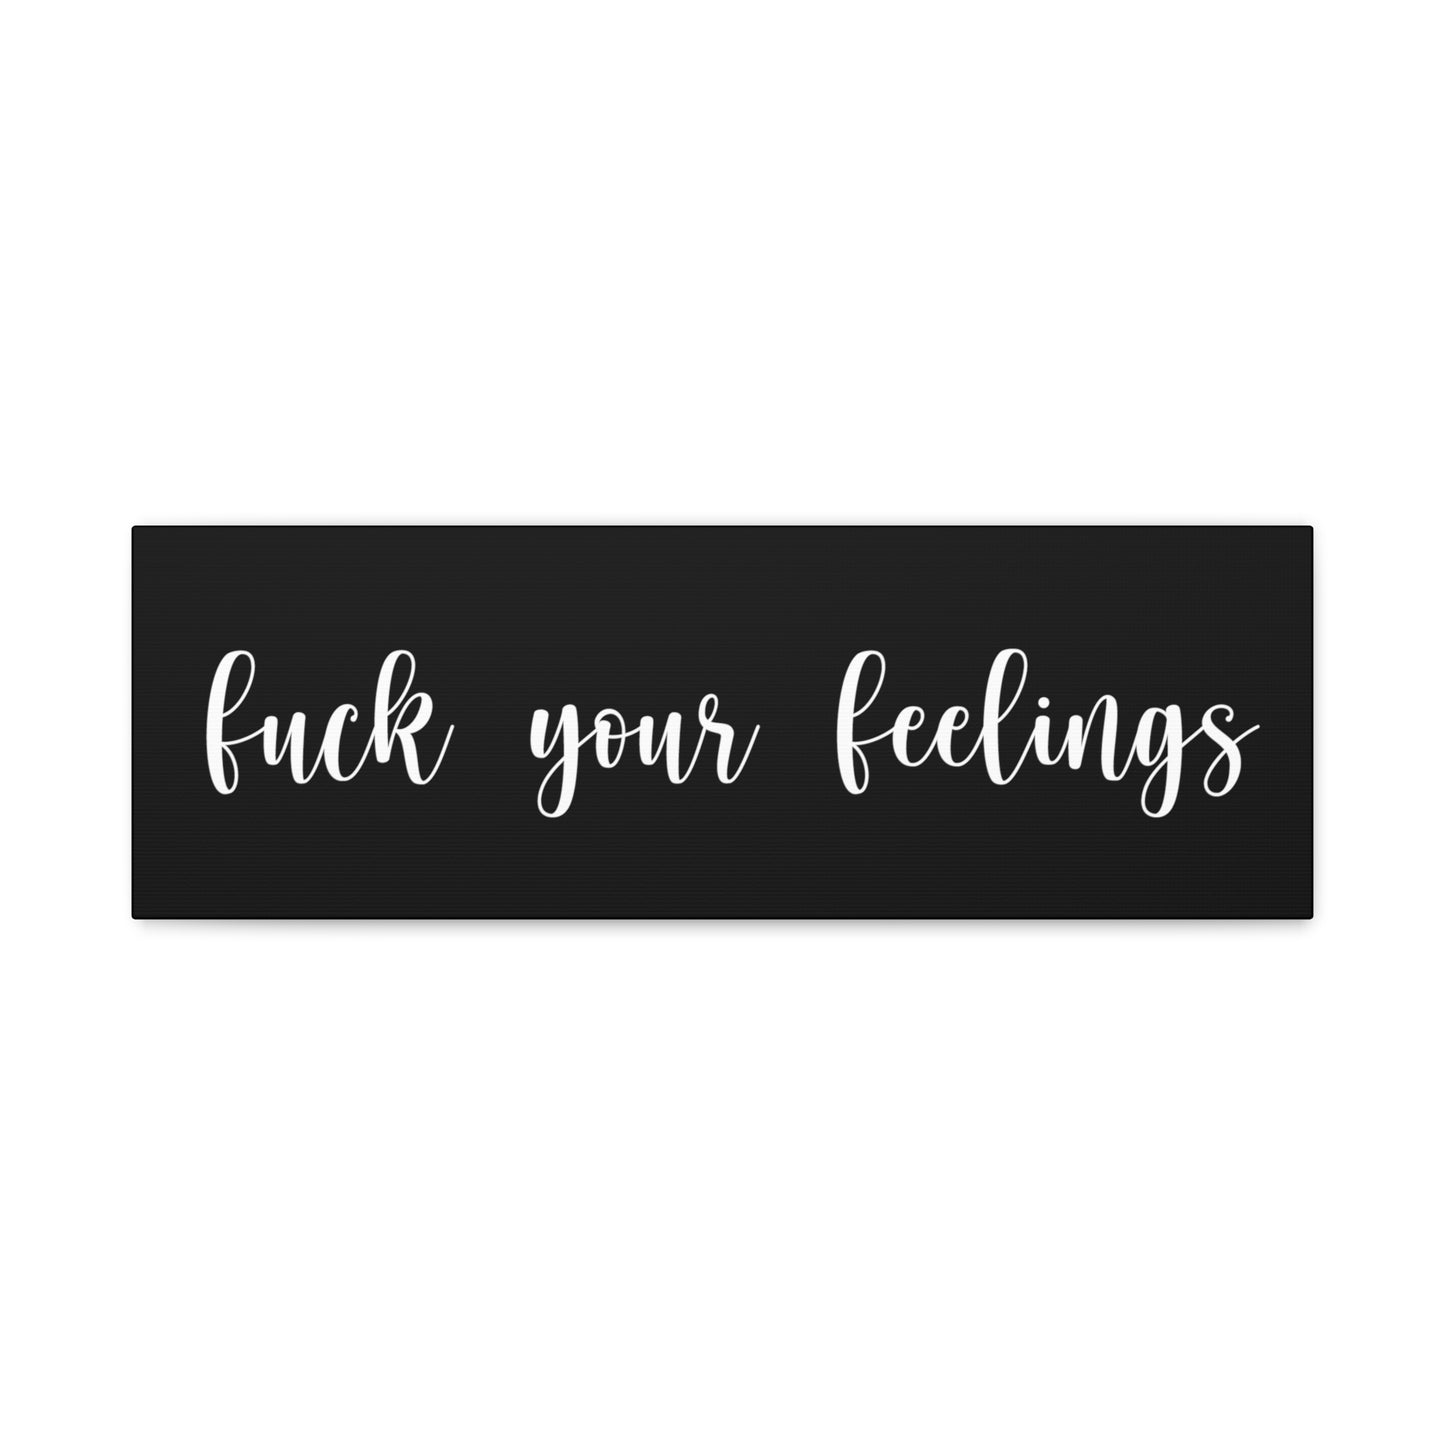 Fuck Your Feelings - Farmhouse style - Black